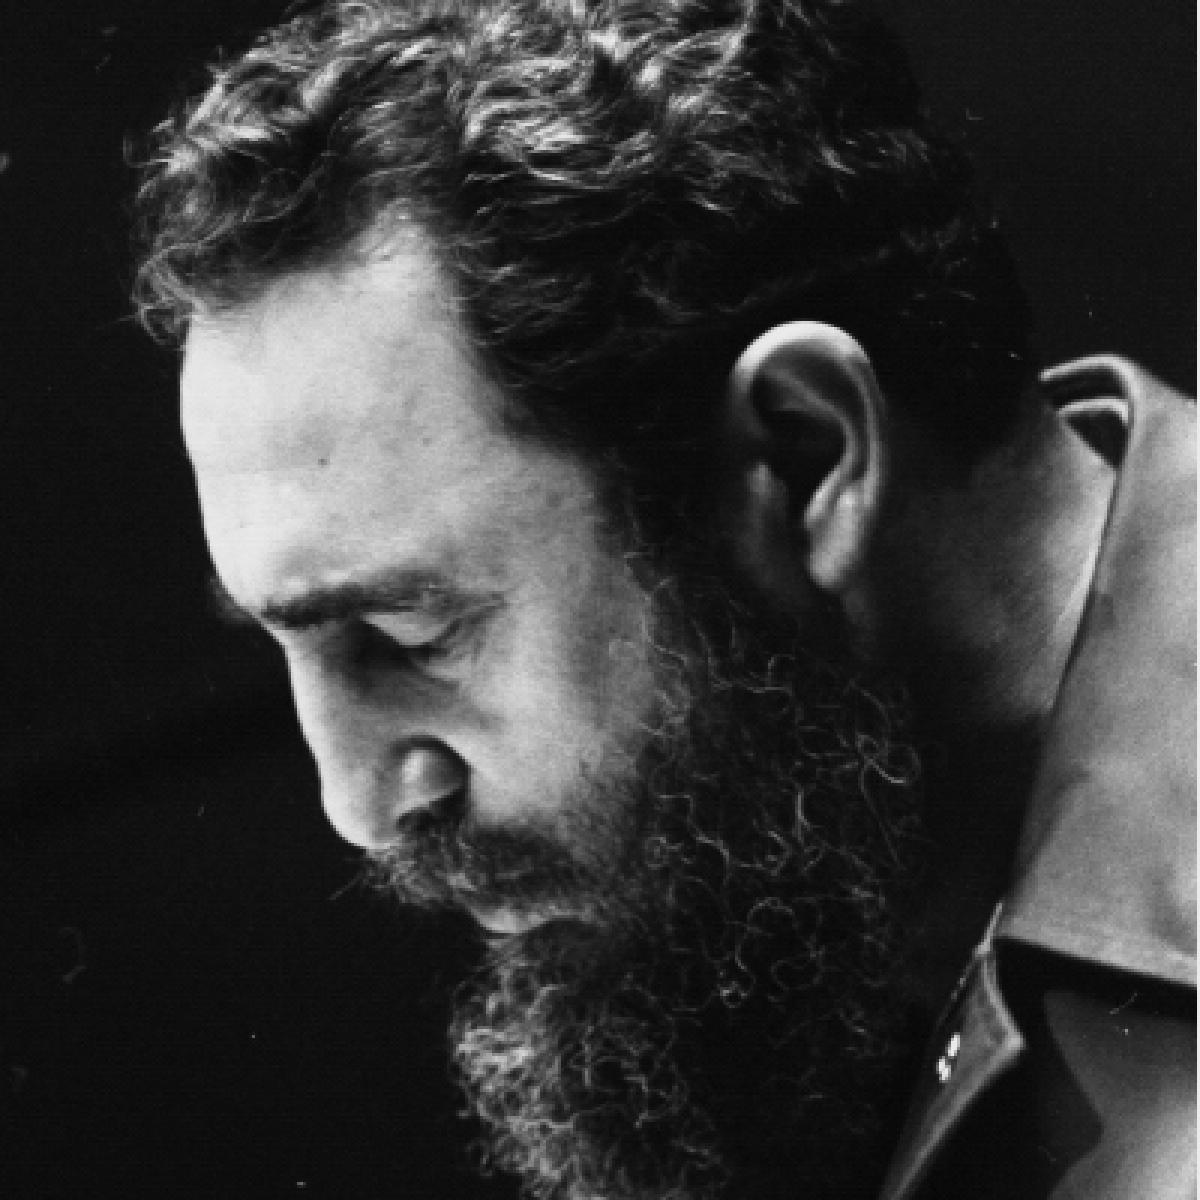 Fidel Castro Wallpaper For Your Desktop